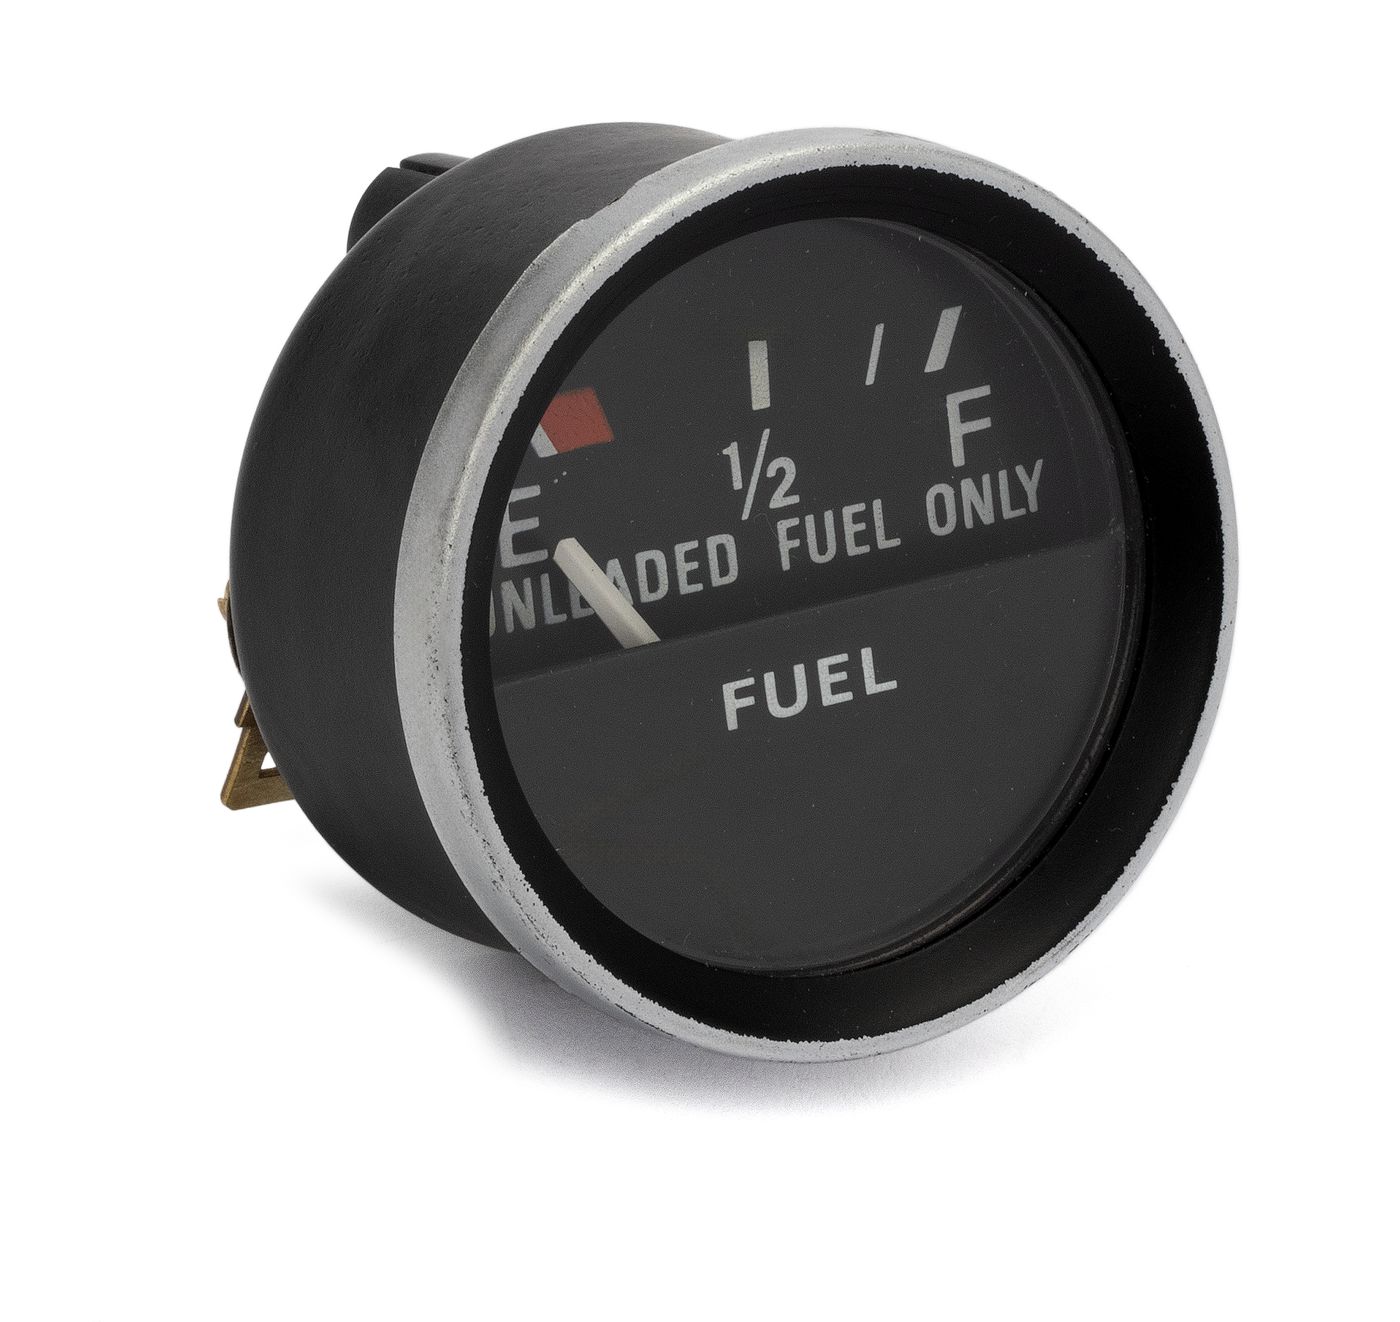 Tankanzeige
Fuel gauge
Jauge du carburant
Wskaźnik paliwa
Indic